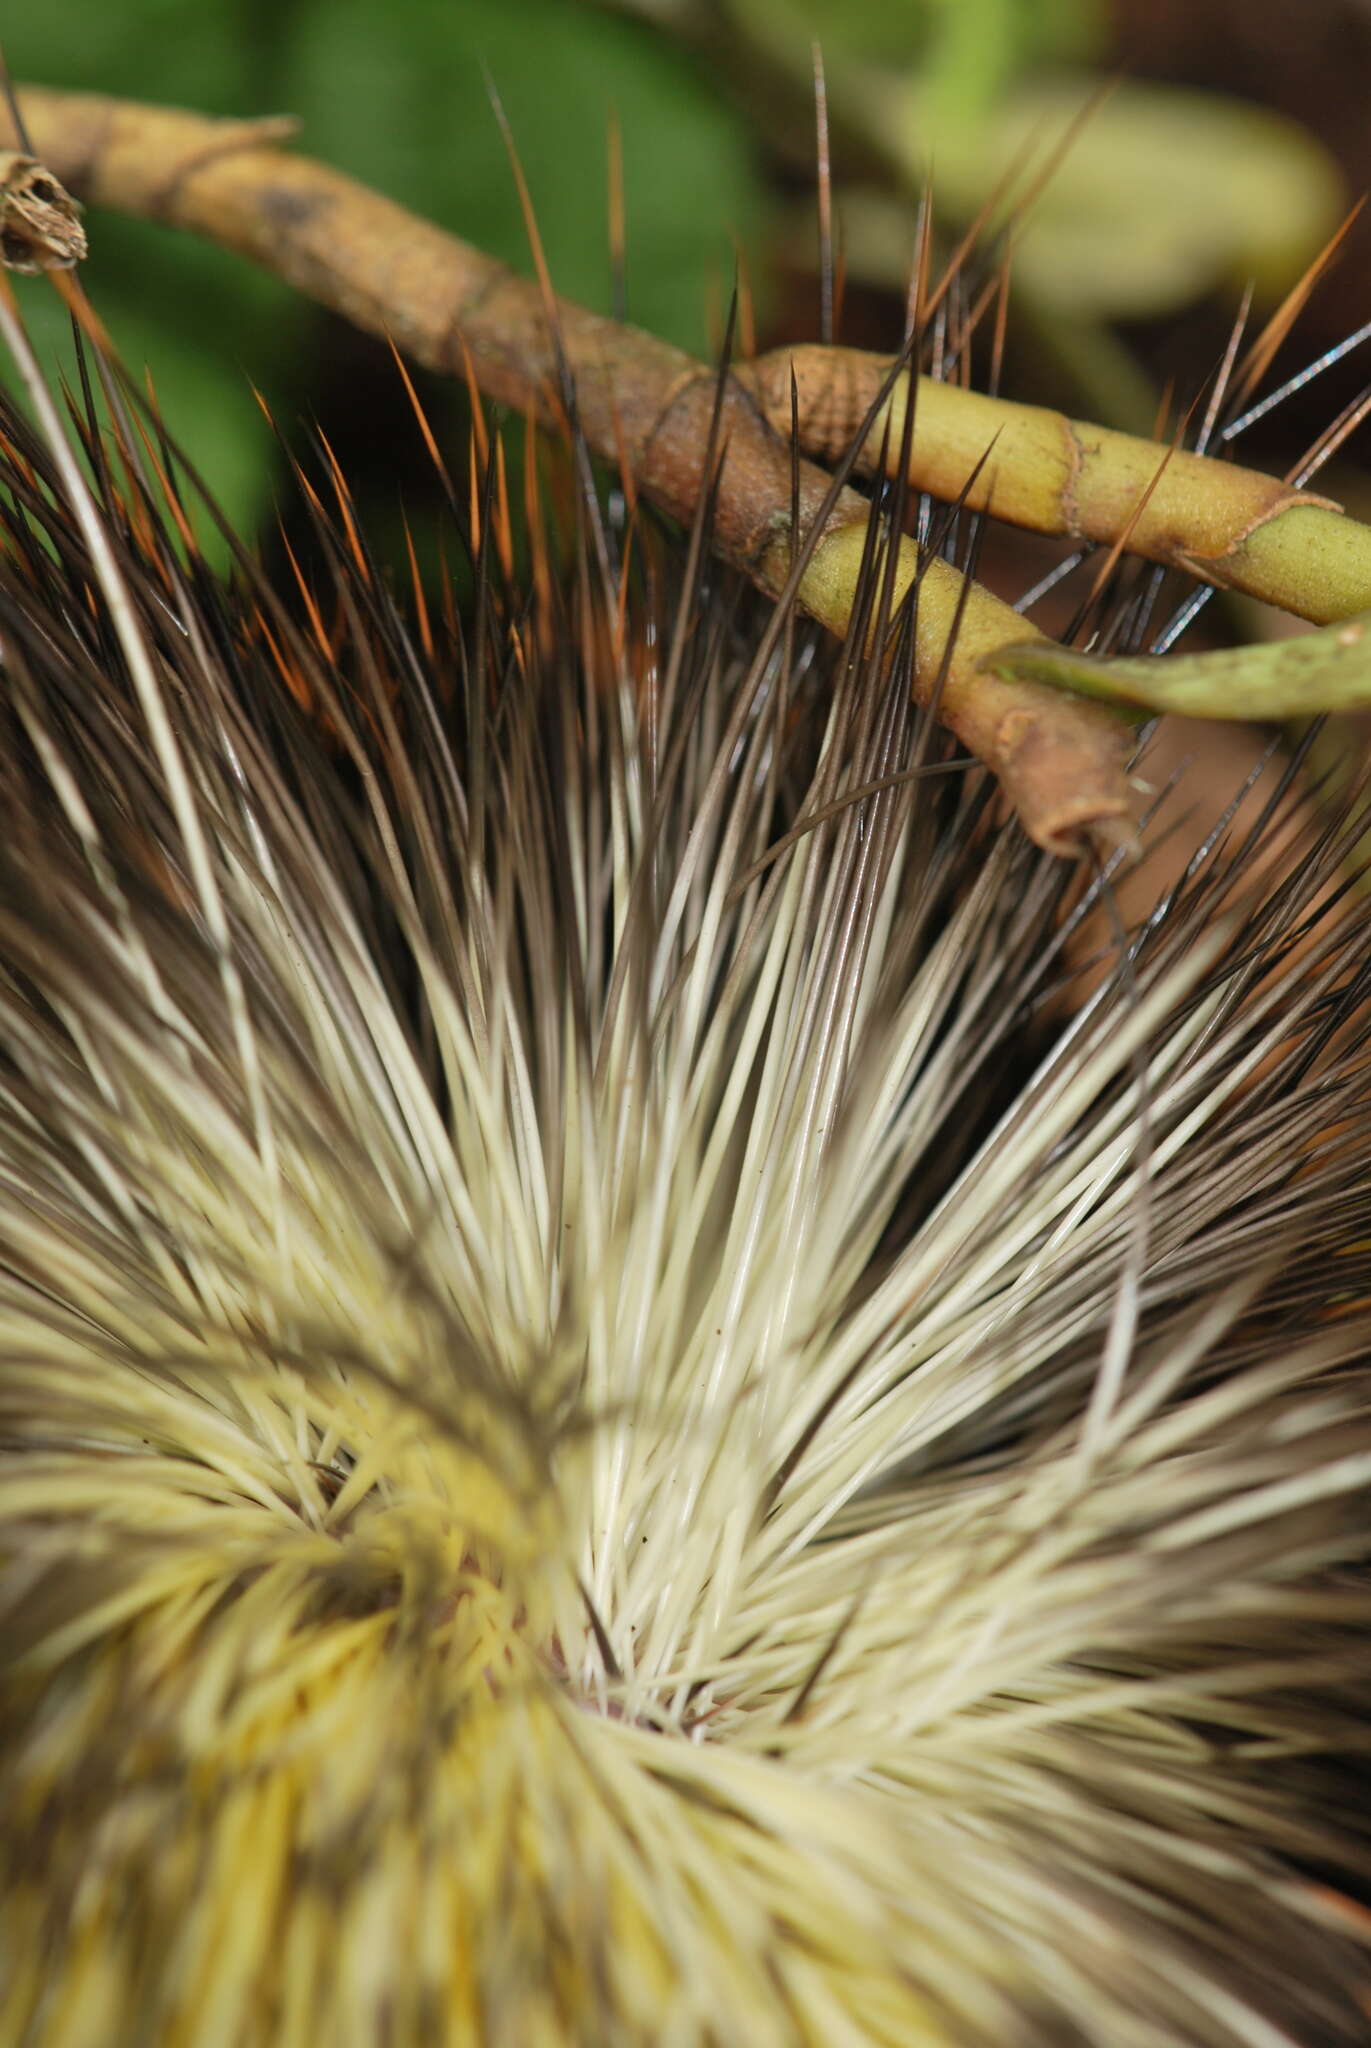 Image of stump-tailed porcupine